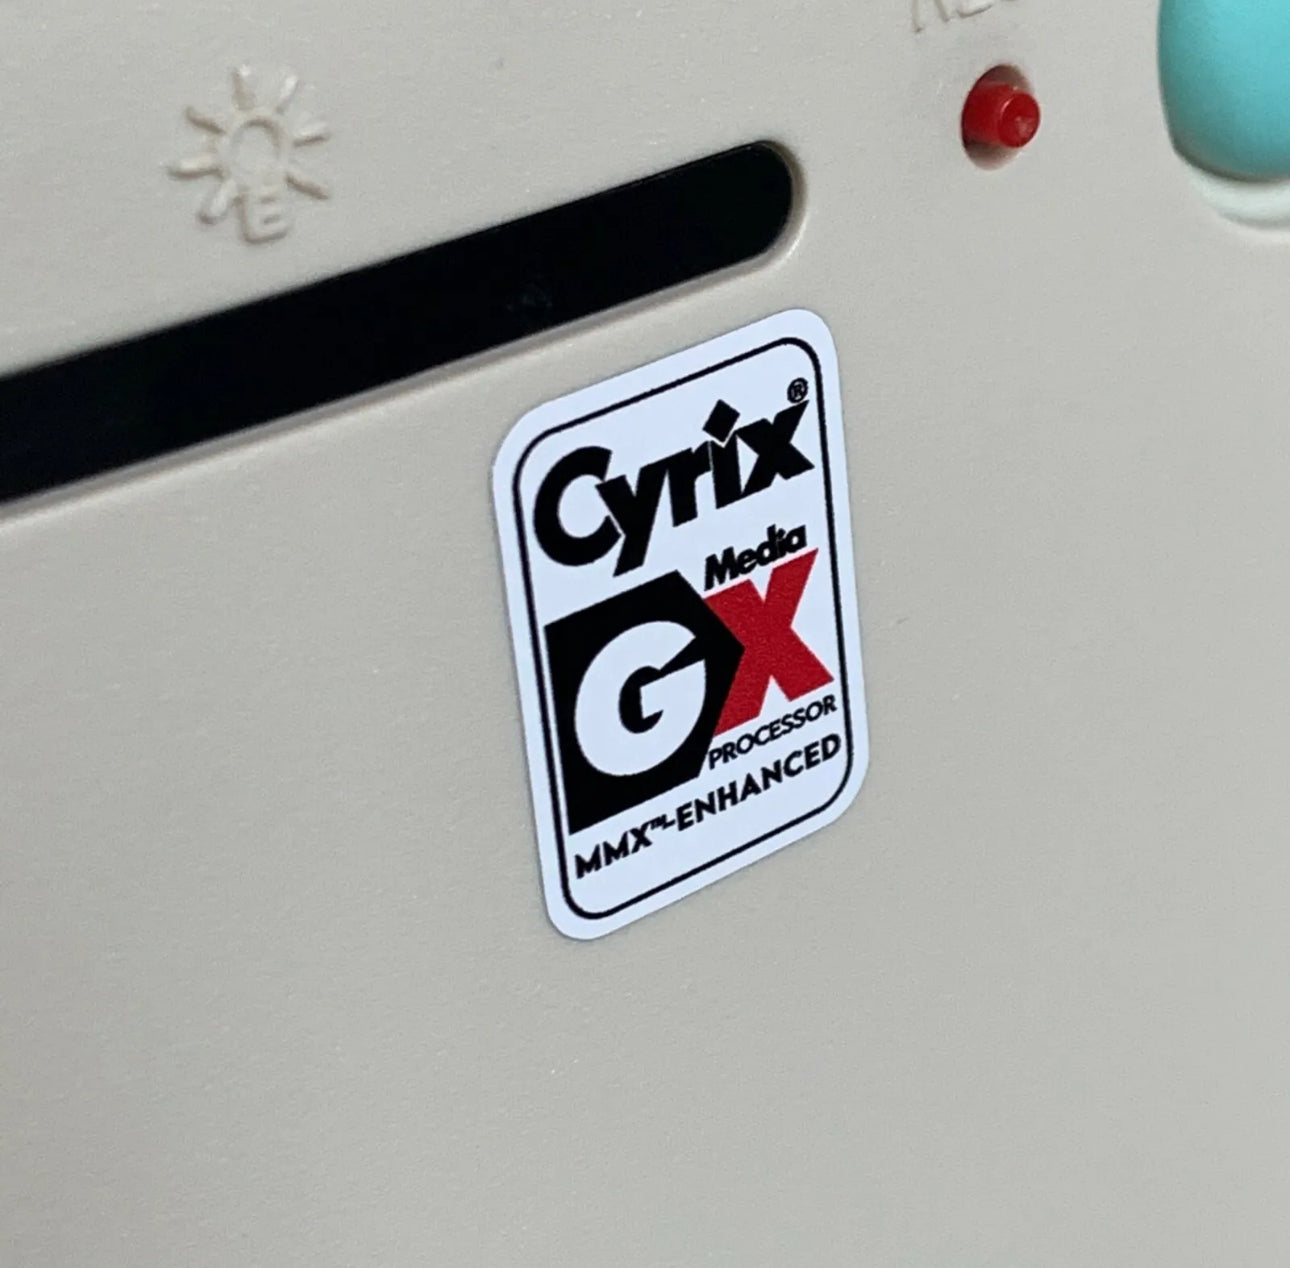 Cyrix GX Media Processor Case Badge Sticker - White